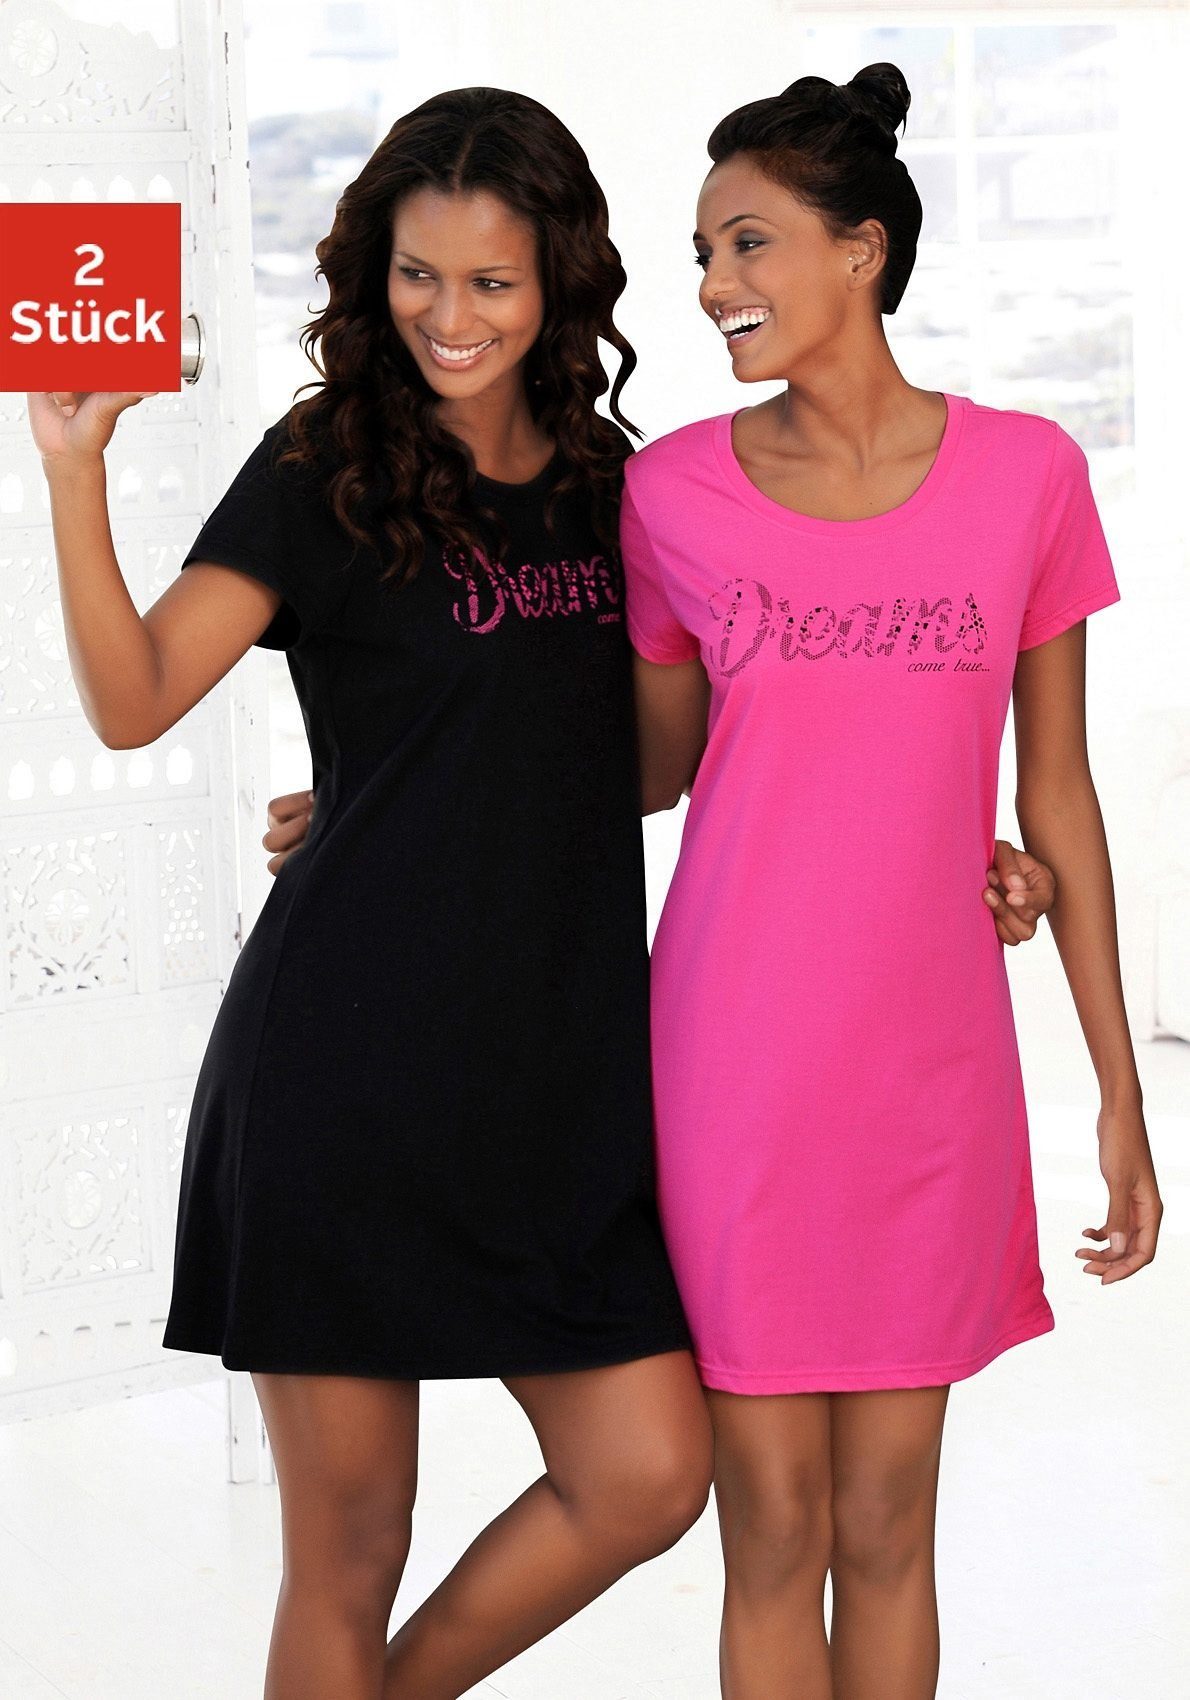 Vivance Dreams Sleepshirt (2er-Pack) pink, schwarz Spitzenoptik mit Print in